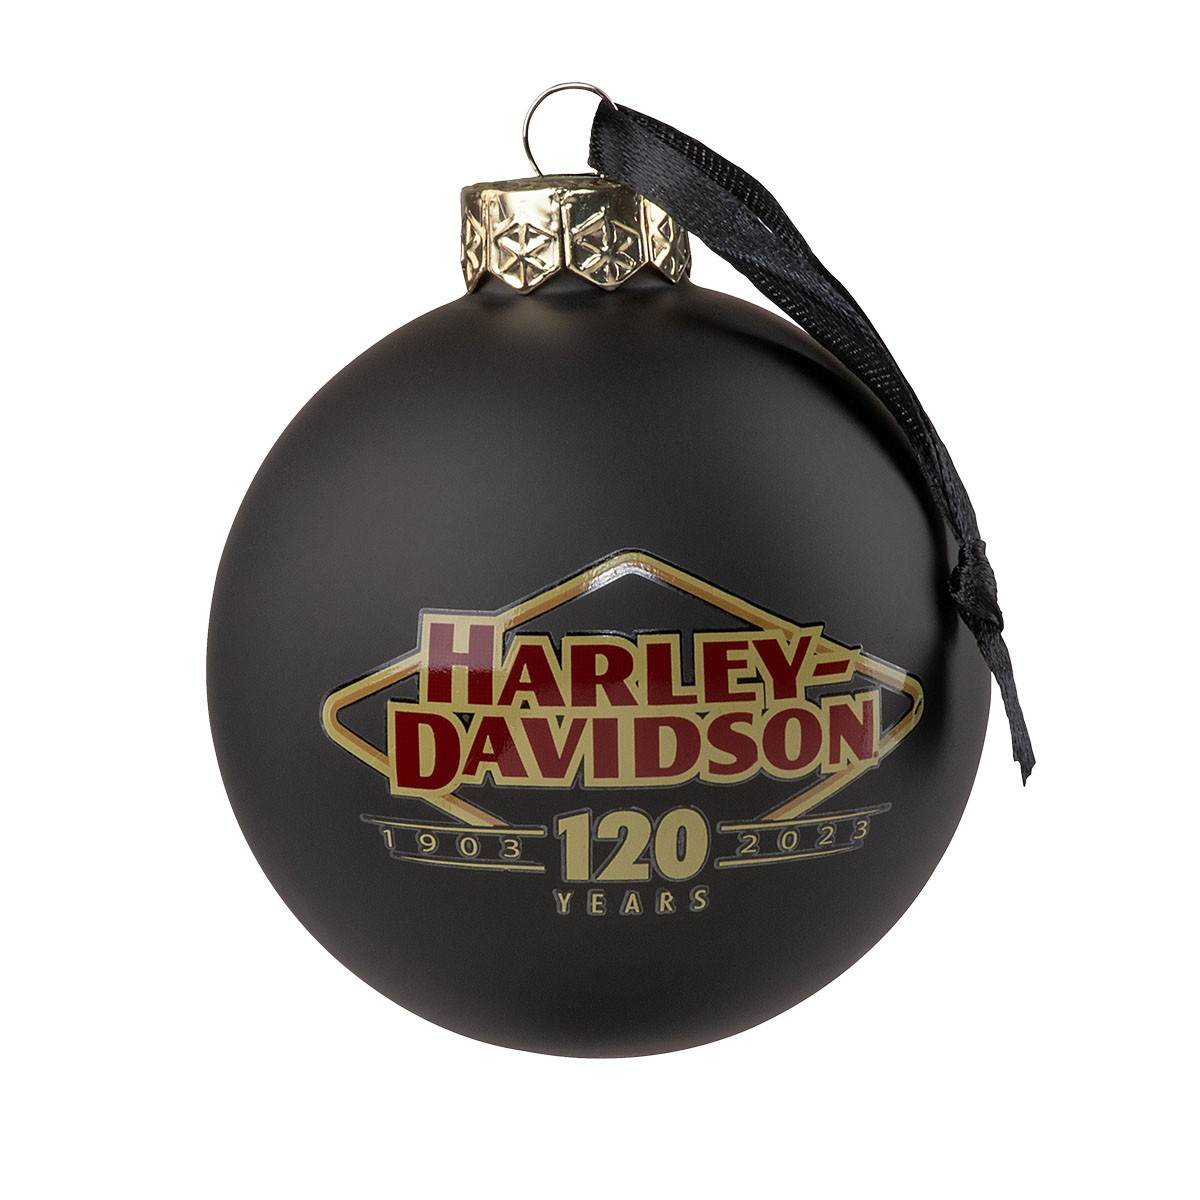 HARLEY DAVIDSON 120TH ANNIVERSARY BALL ORNAMENT